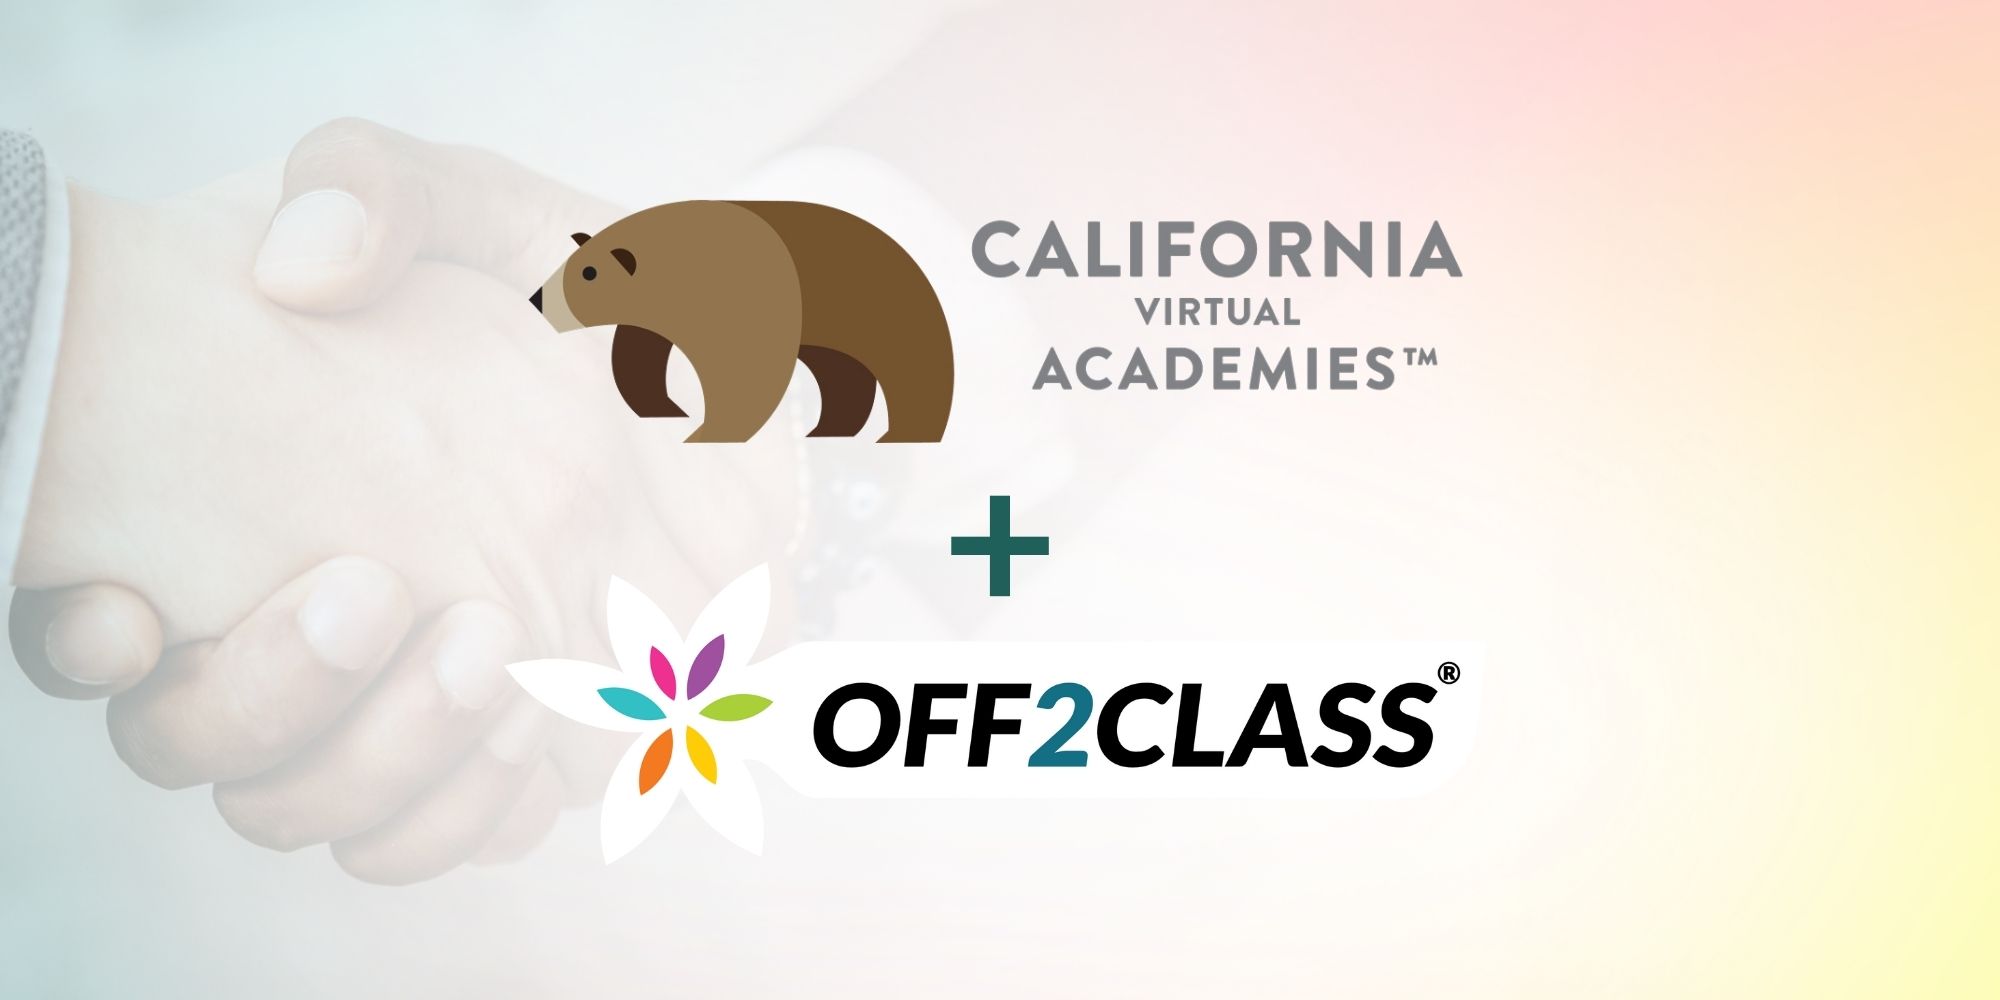 Stride K12 in California Online Public Schools Off2Class